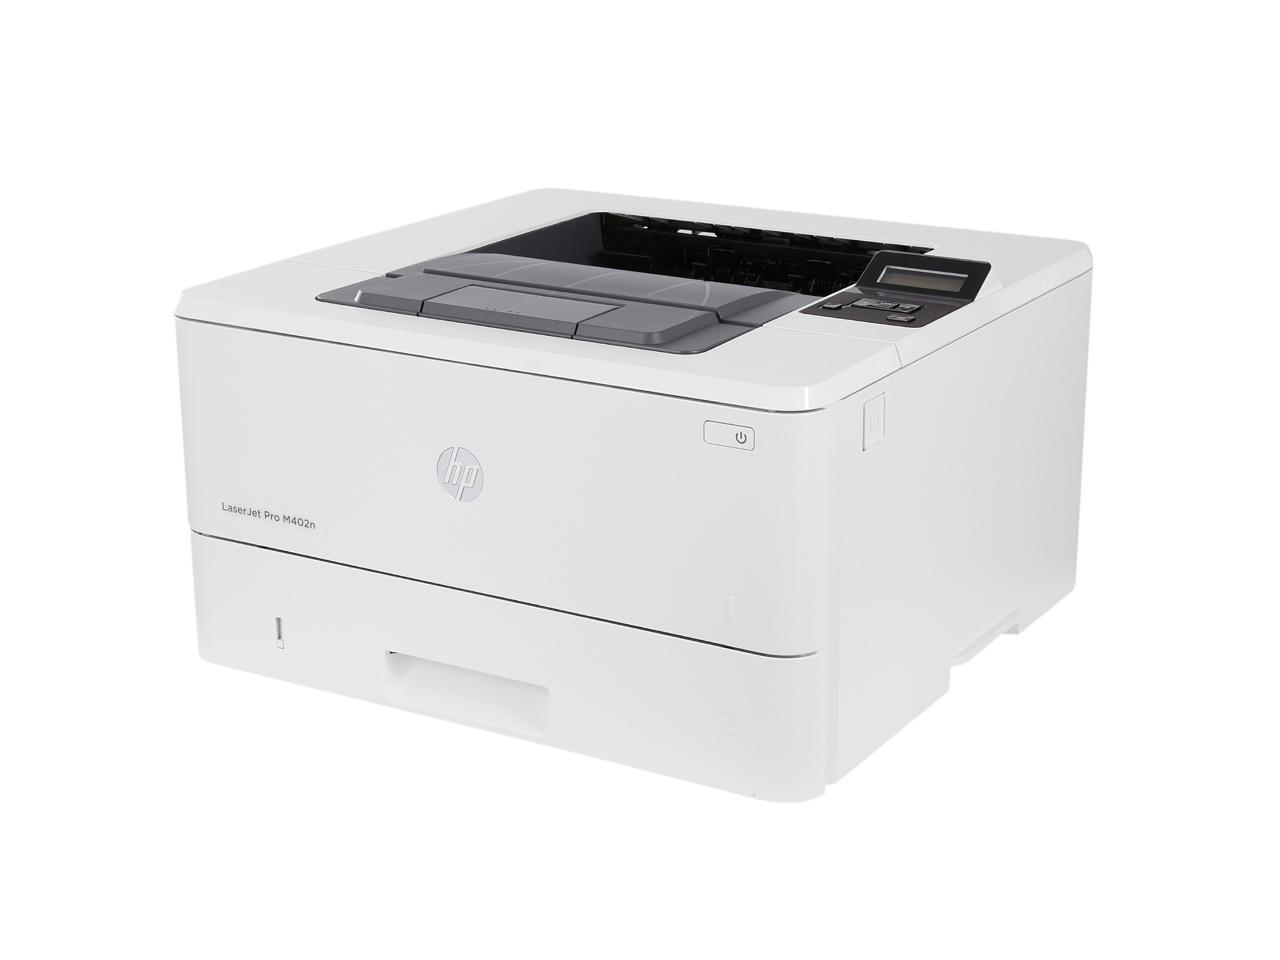 Hp Laserjet Pro M402n Usb Monochrome Laser Printer Newegg Com Newegg Com